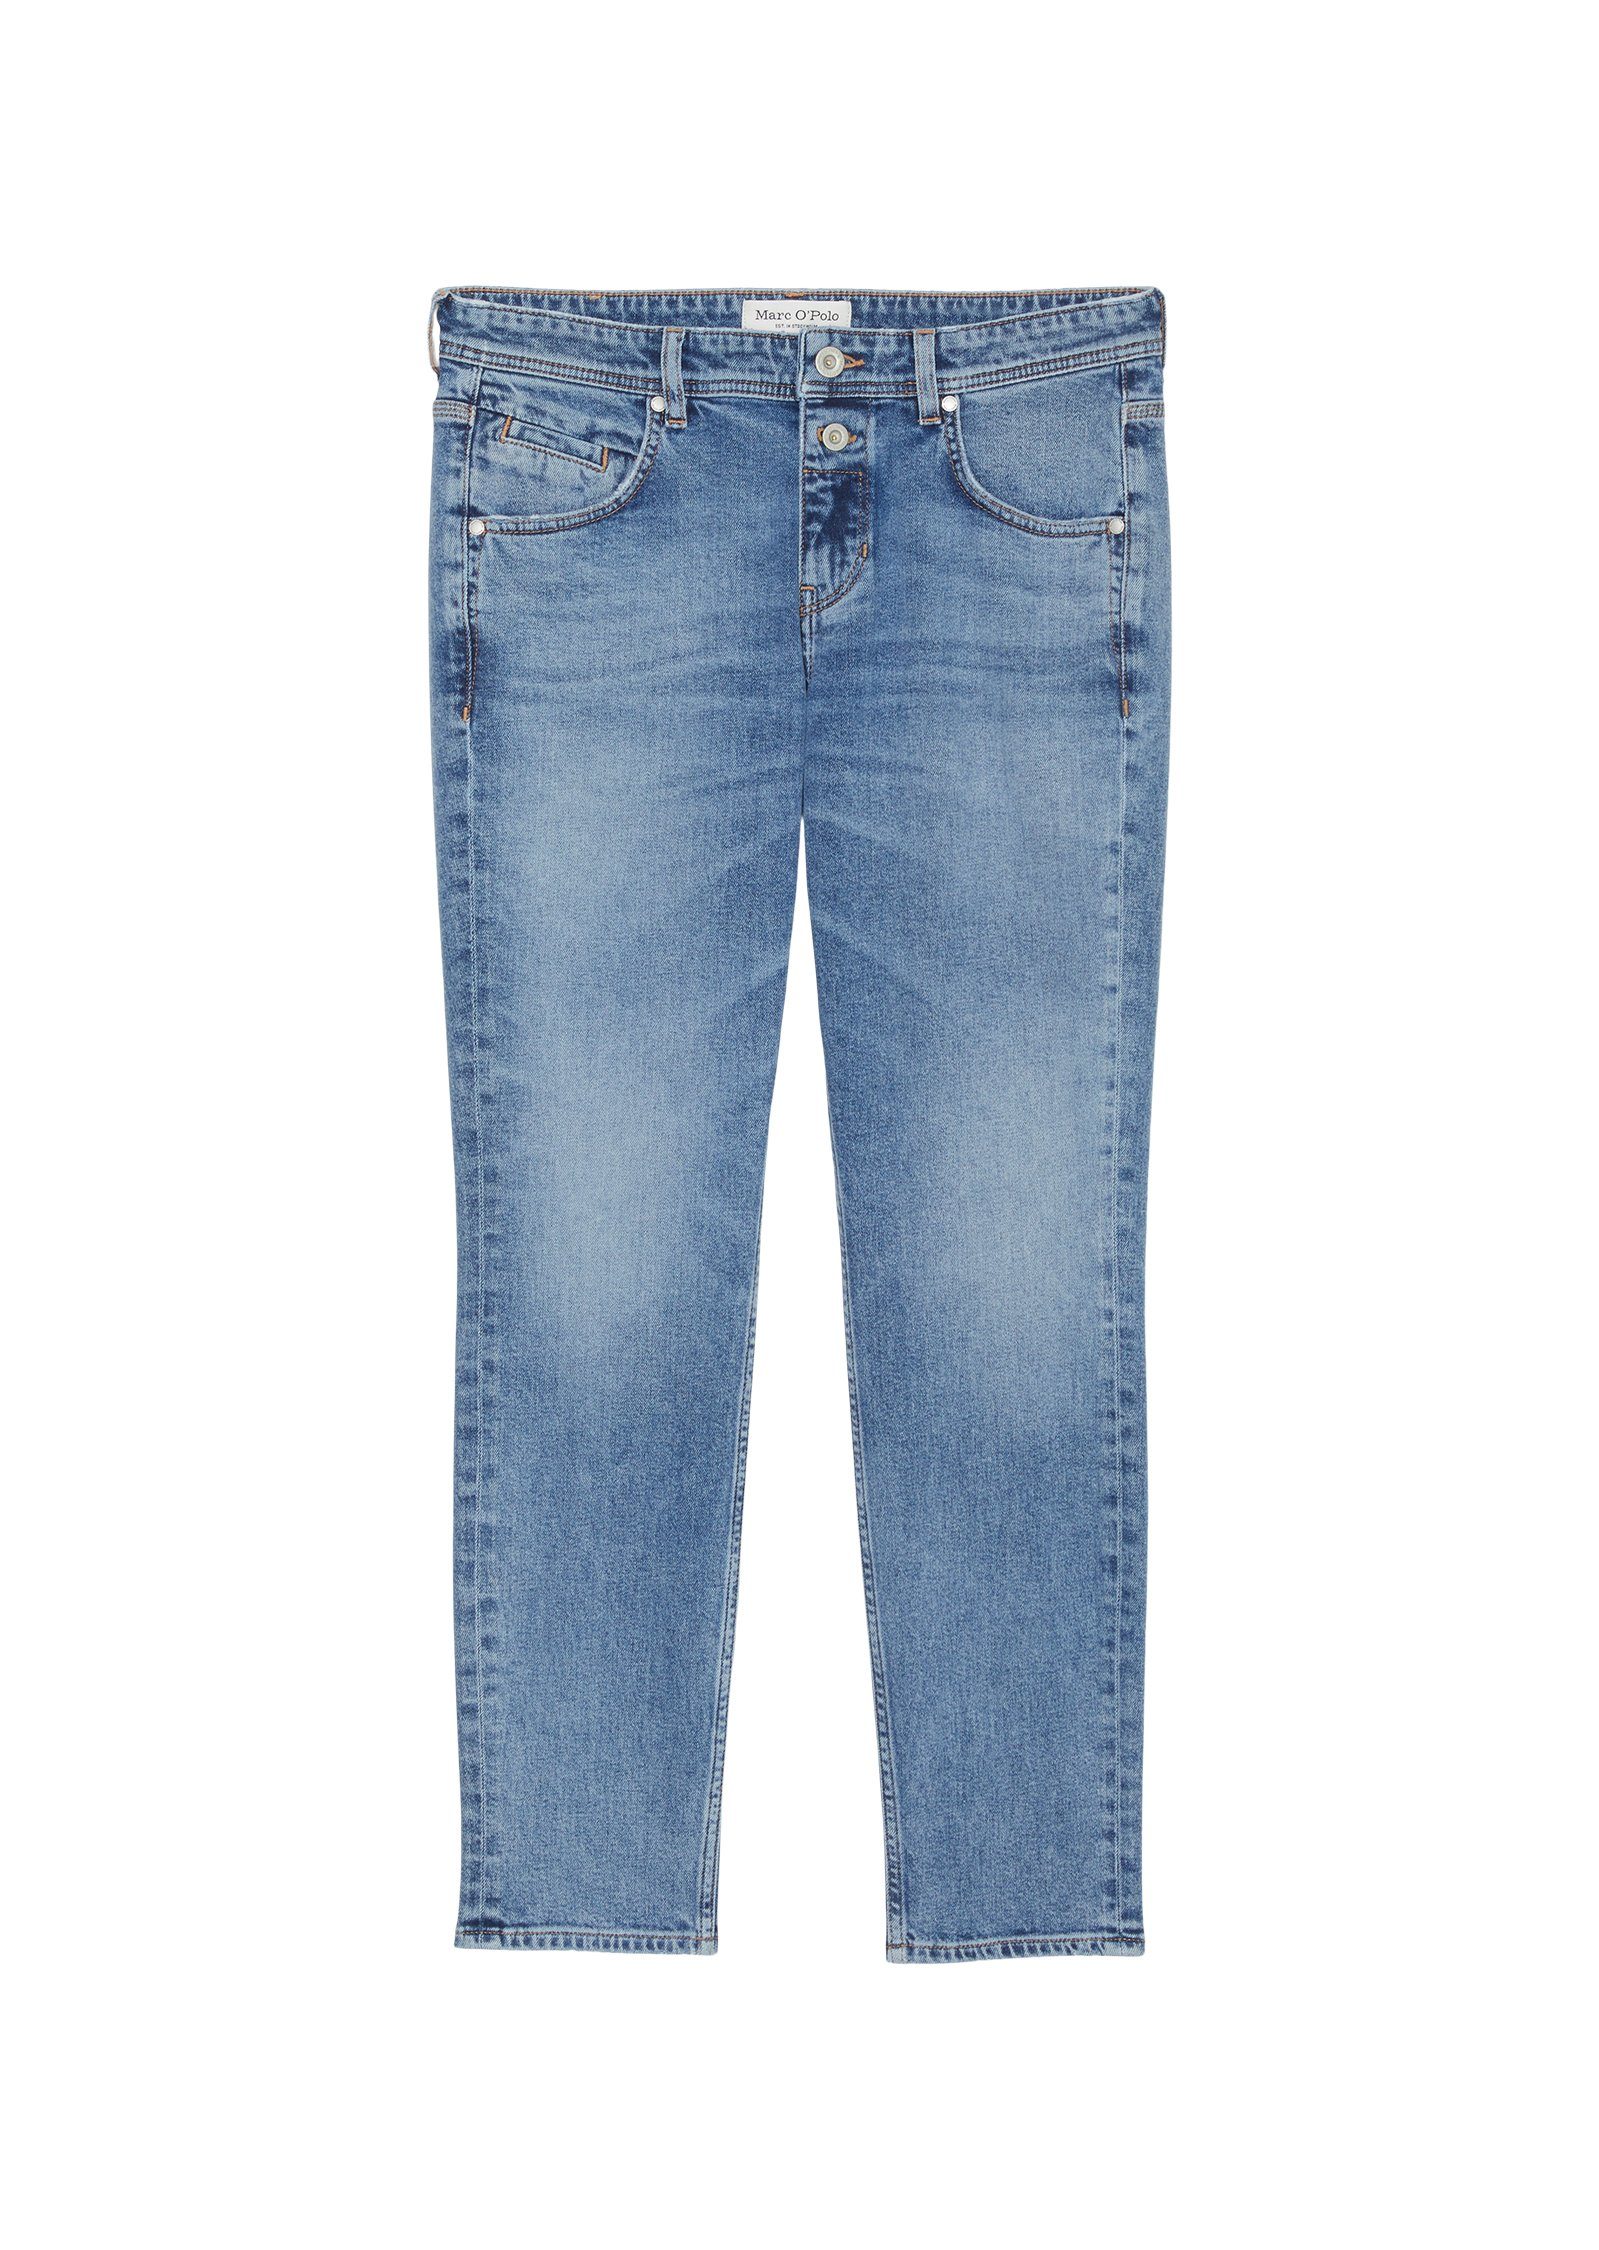 Marc O'Polo 5-Pocket-Jeans Denim trouser, boyfriend fit, cropp